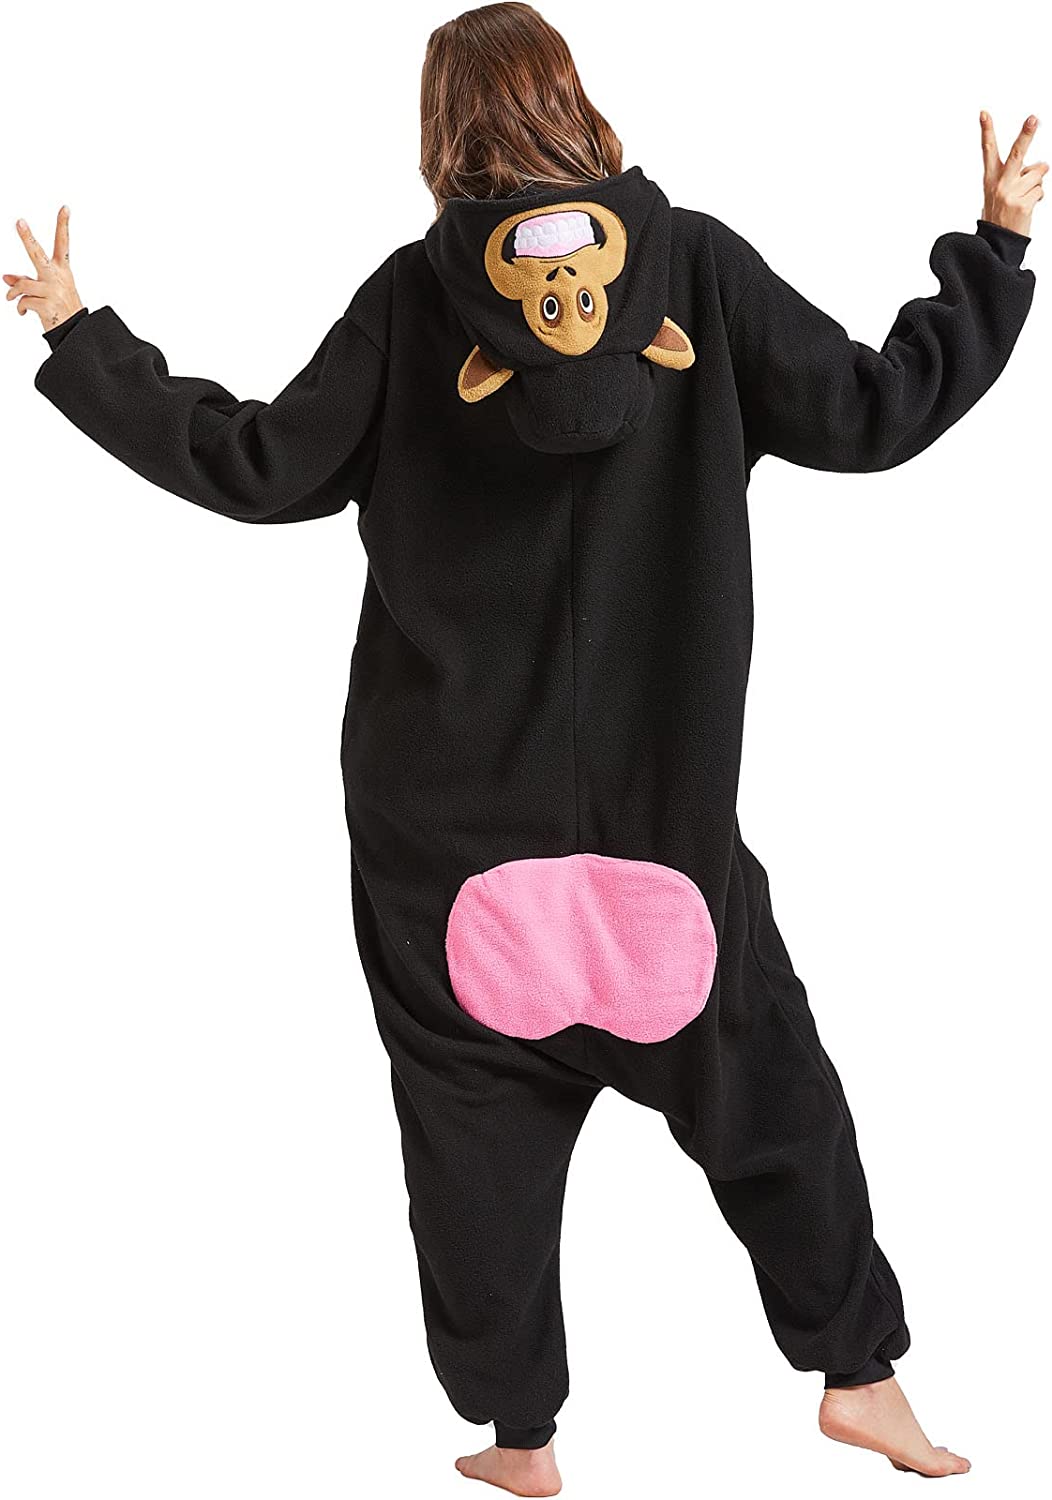 Adult Gorilla Onesie Pajamas Halloween Animal Party Costume